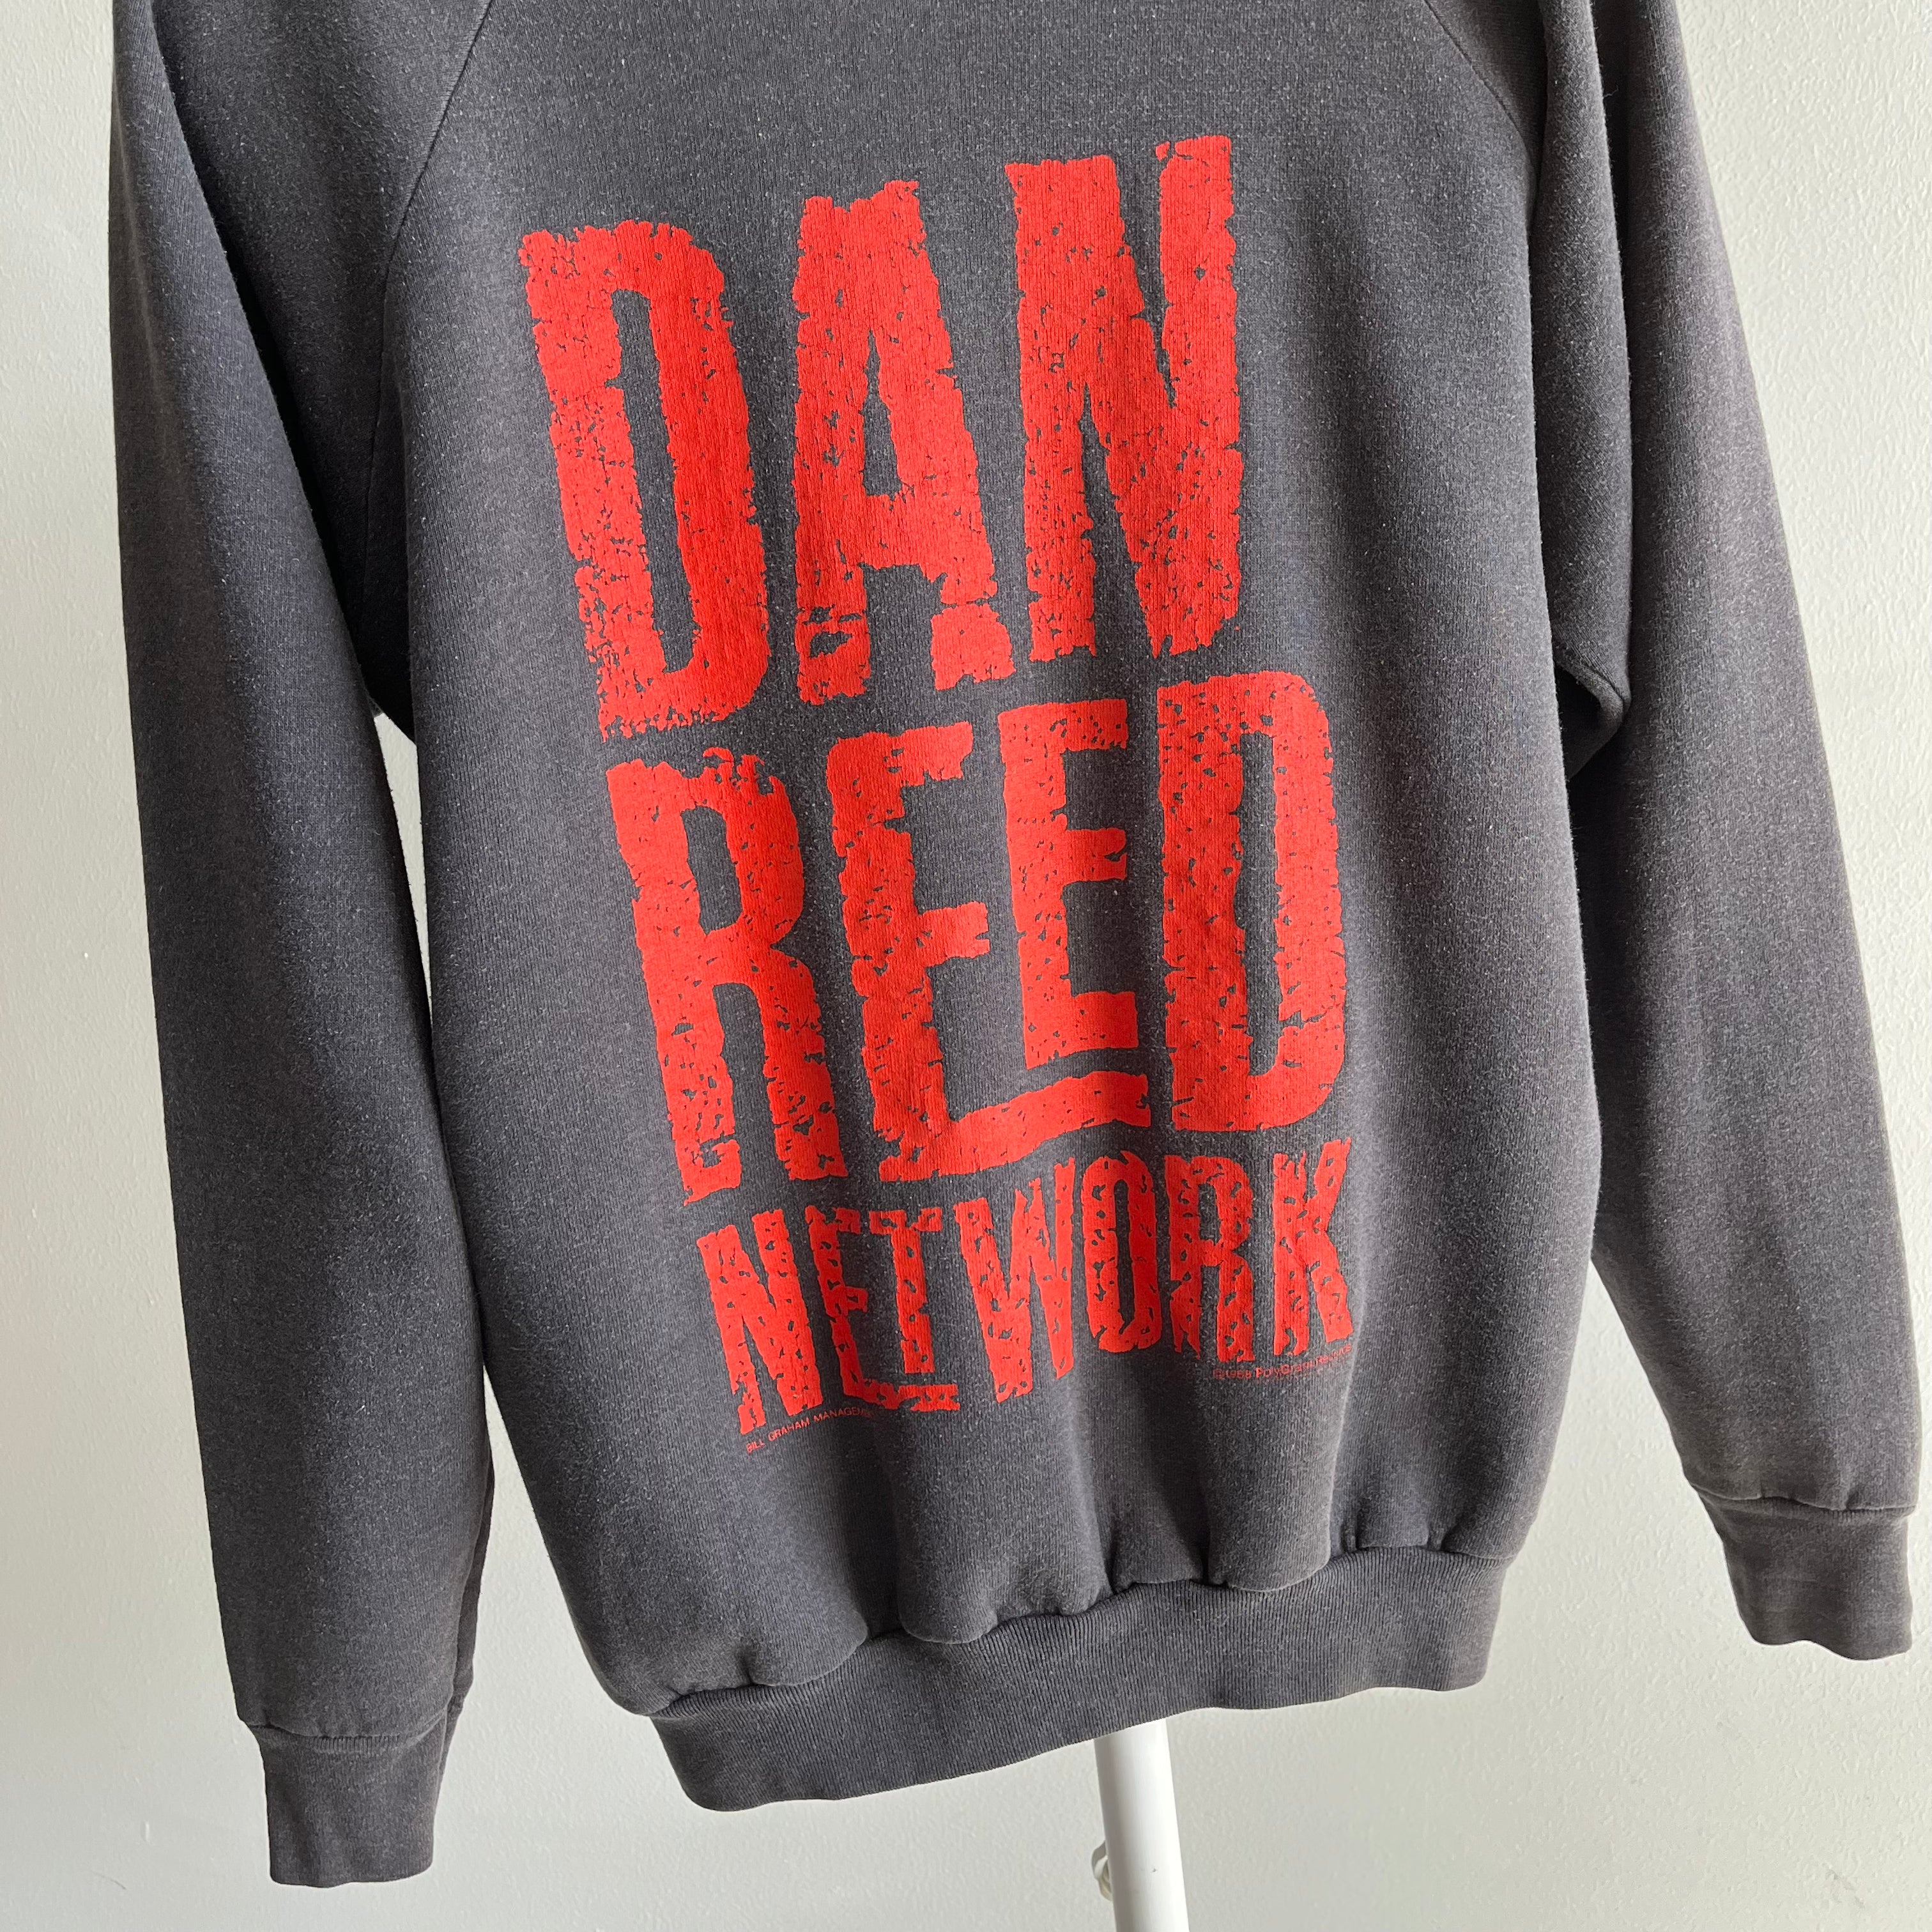 1988 Dan Reed Network Music Sweatshirt - En avez-vous entendu parler ??